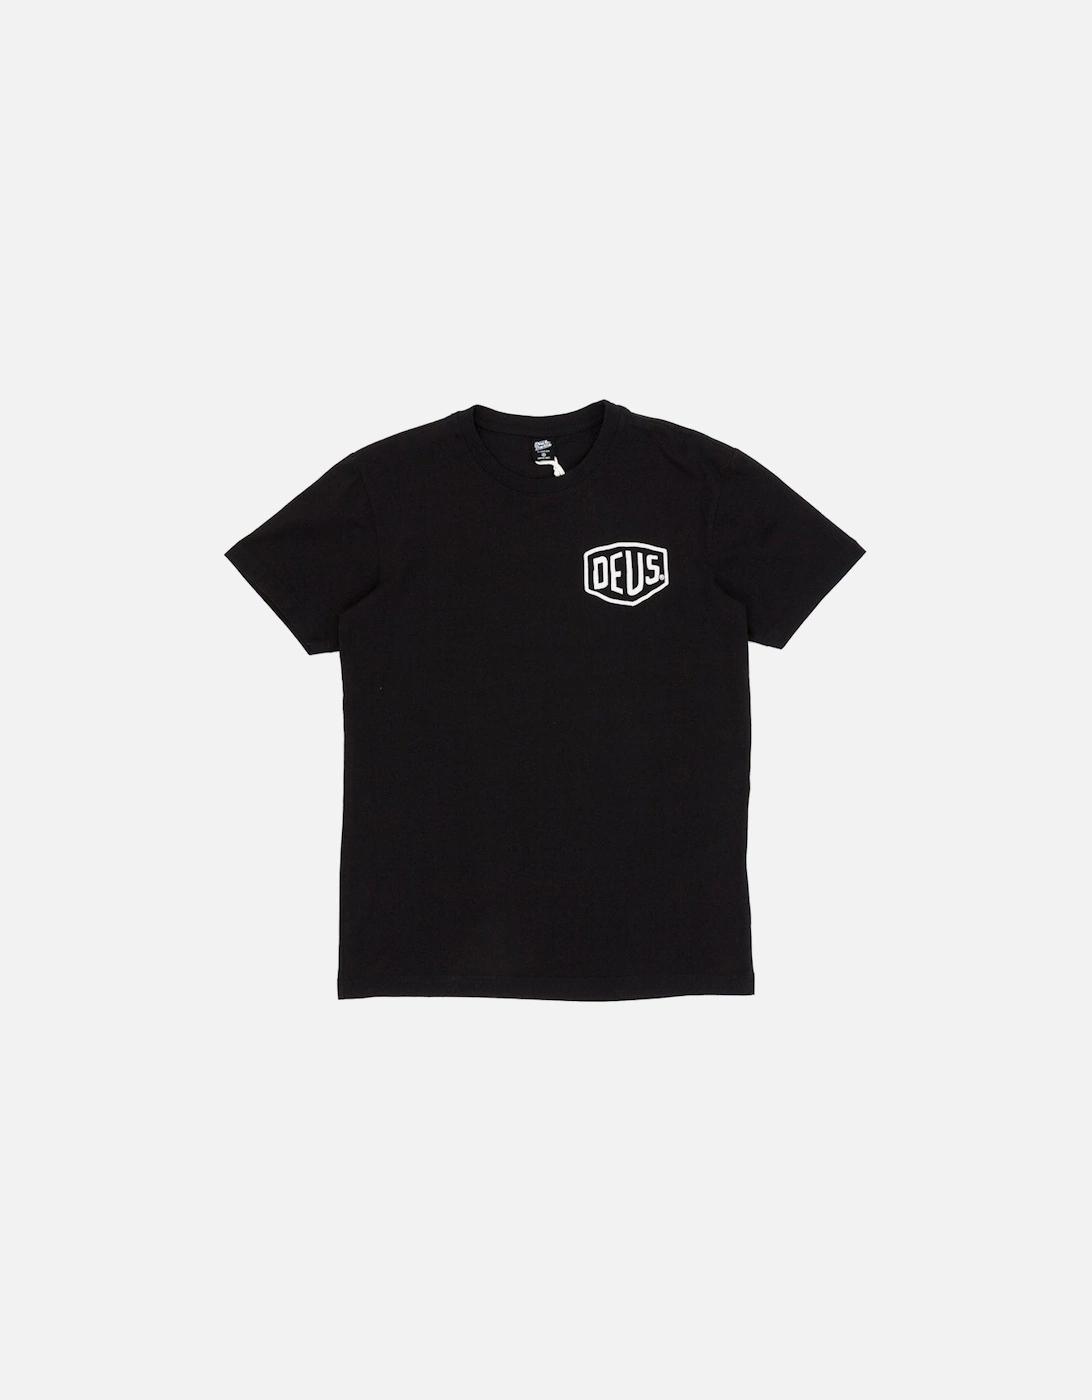 Venice Address T-Shirt - Black